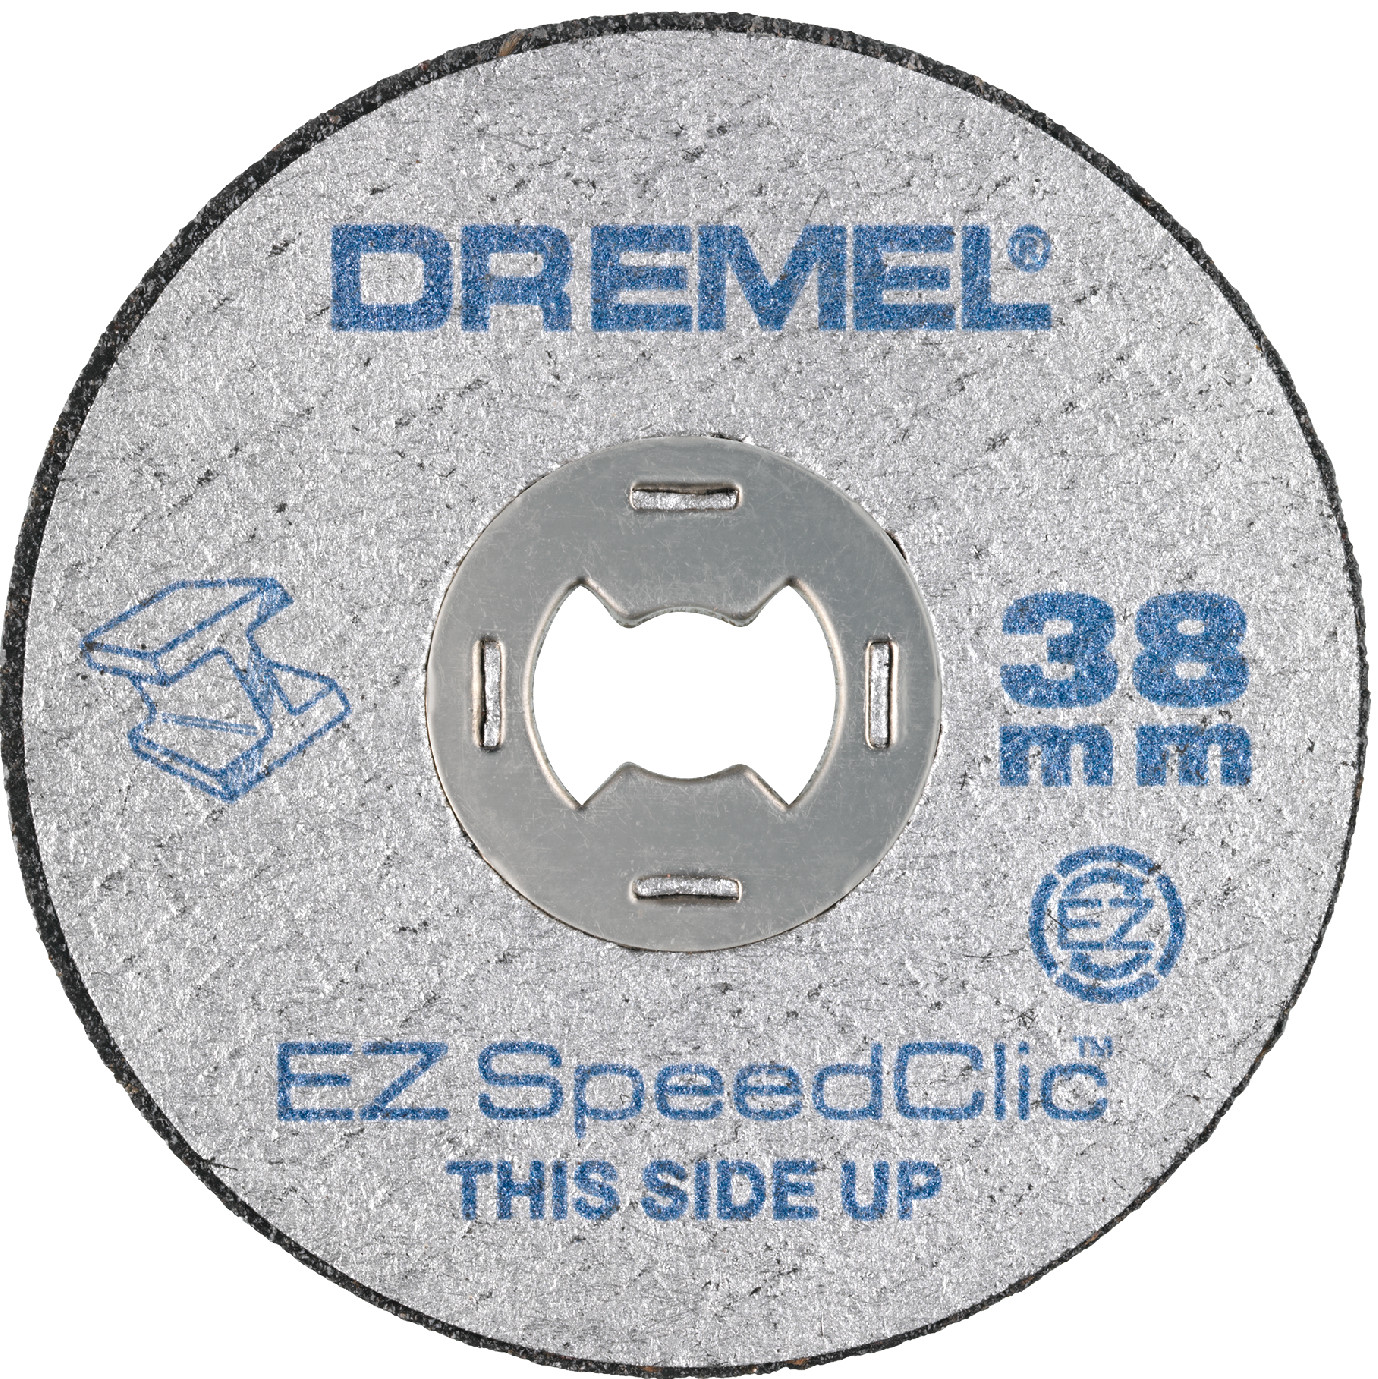 DREMEL SC456 SpeedClic řezný kotouček na kov (5ks)